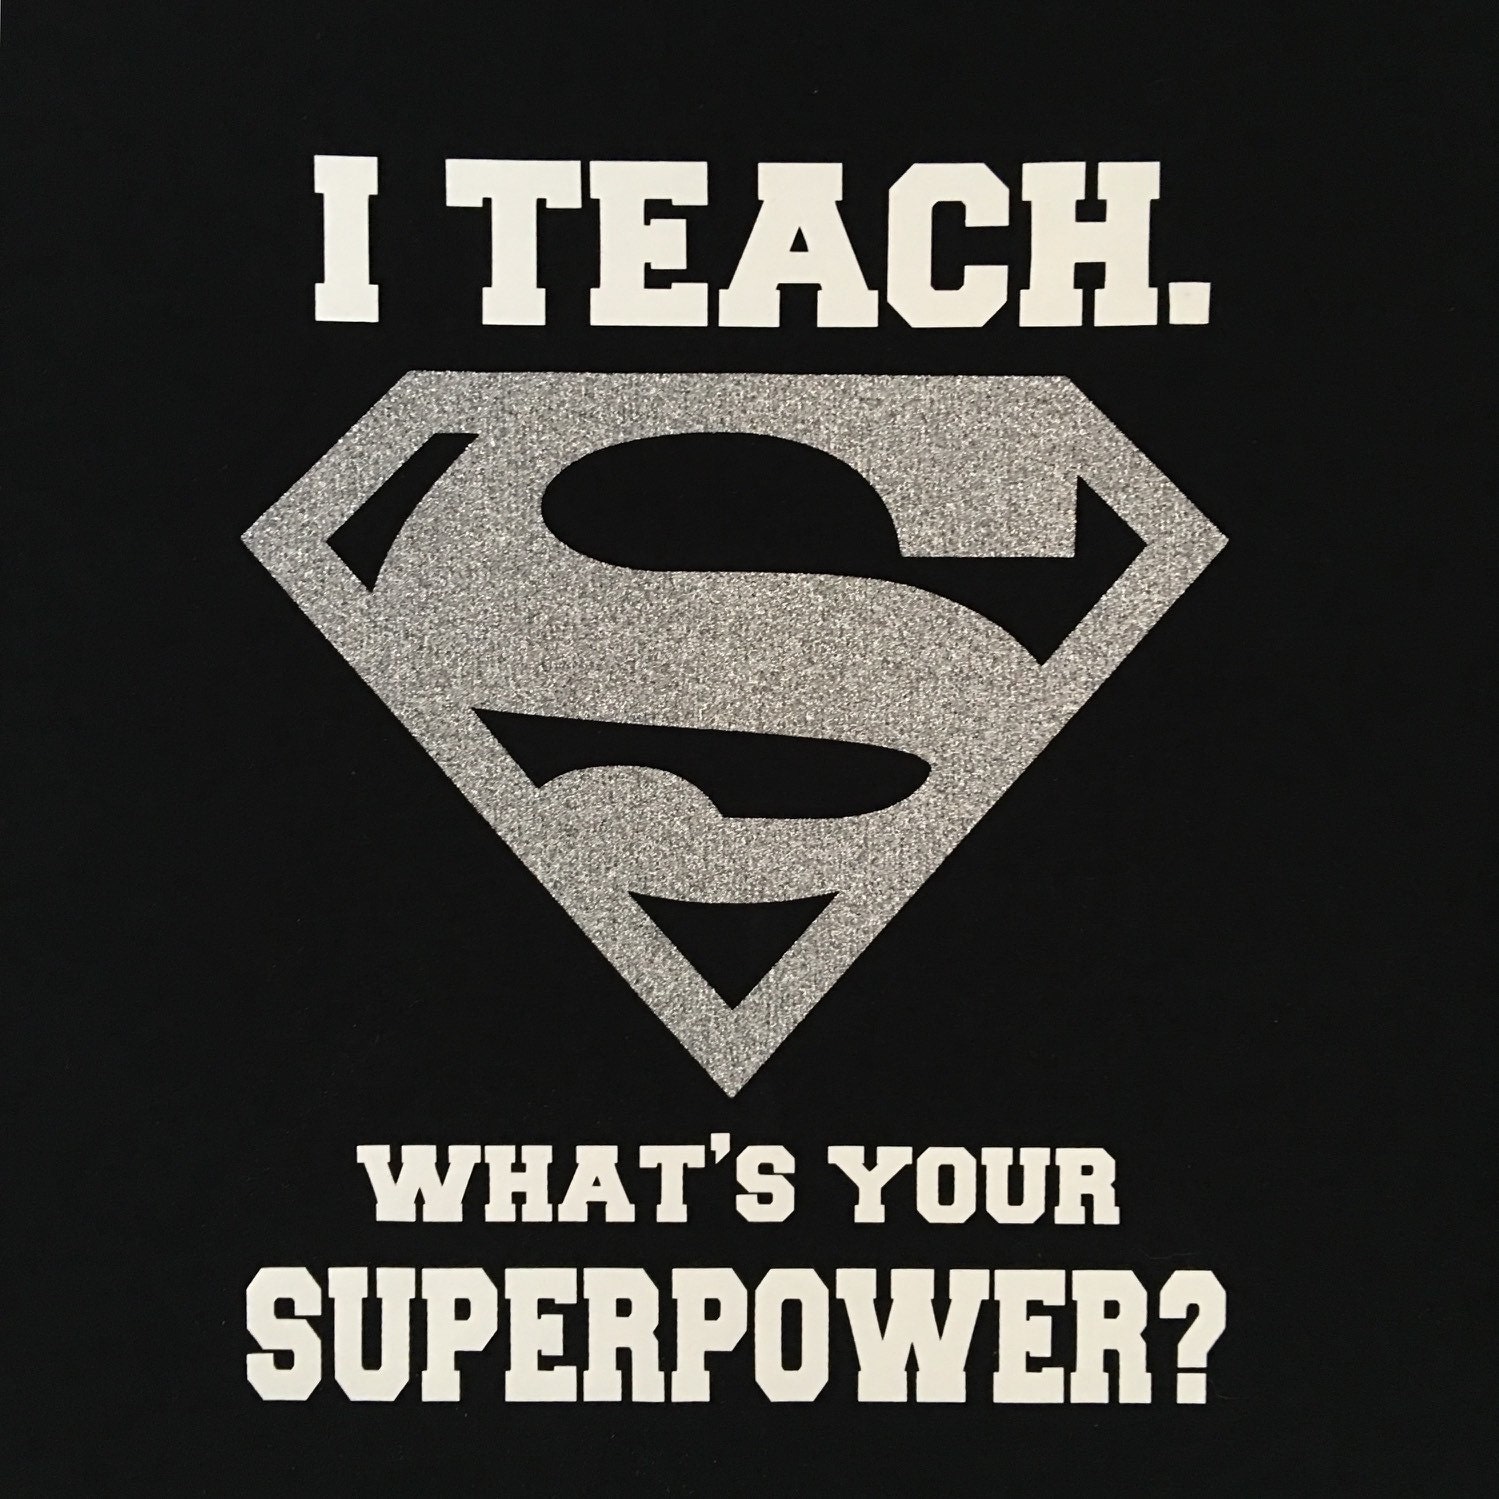 Teachers powers